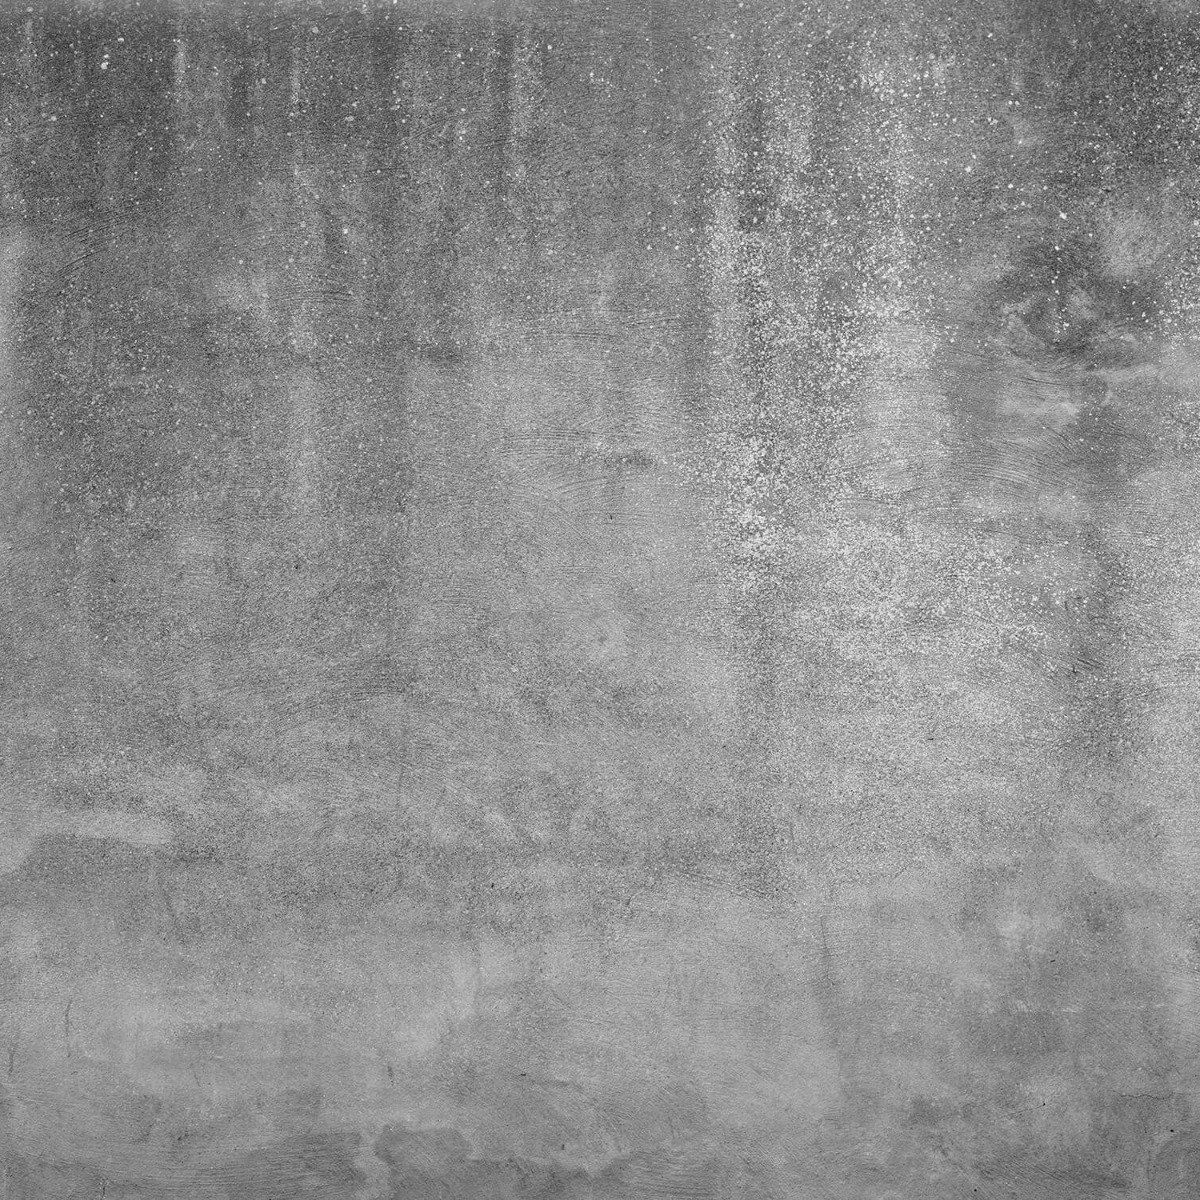 Detailed grey concrete